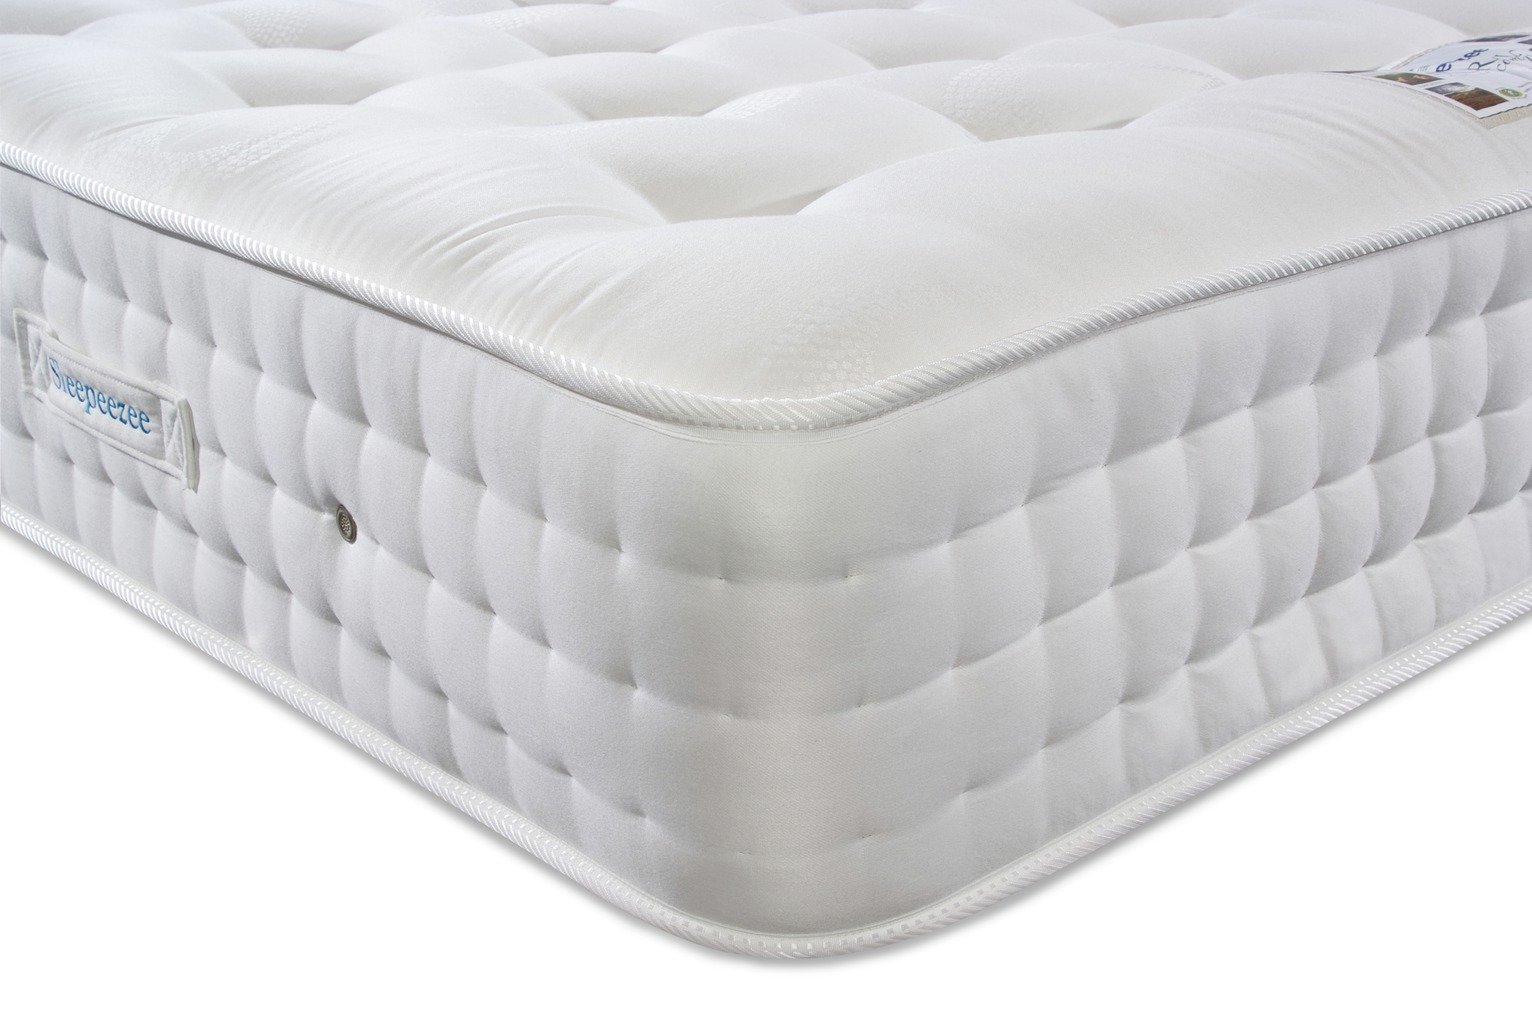 sleepeezee bordeaux 2000 mattress review